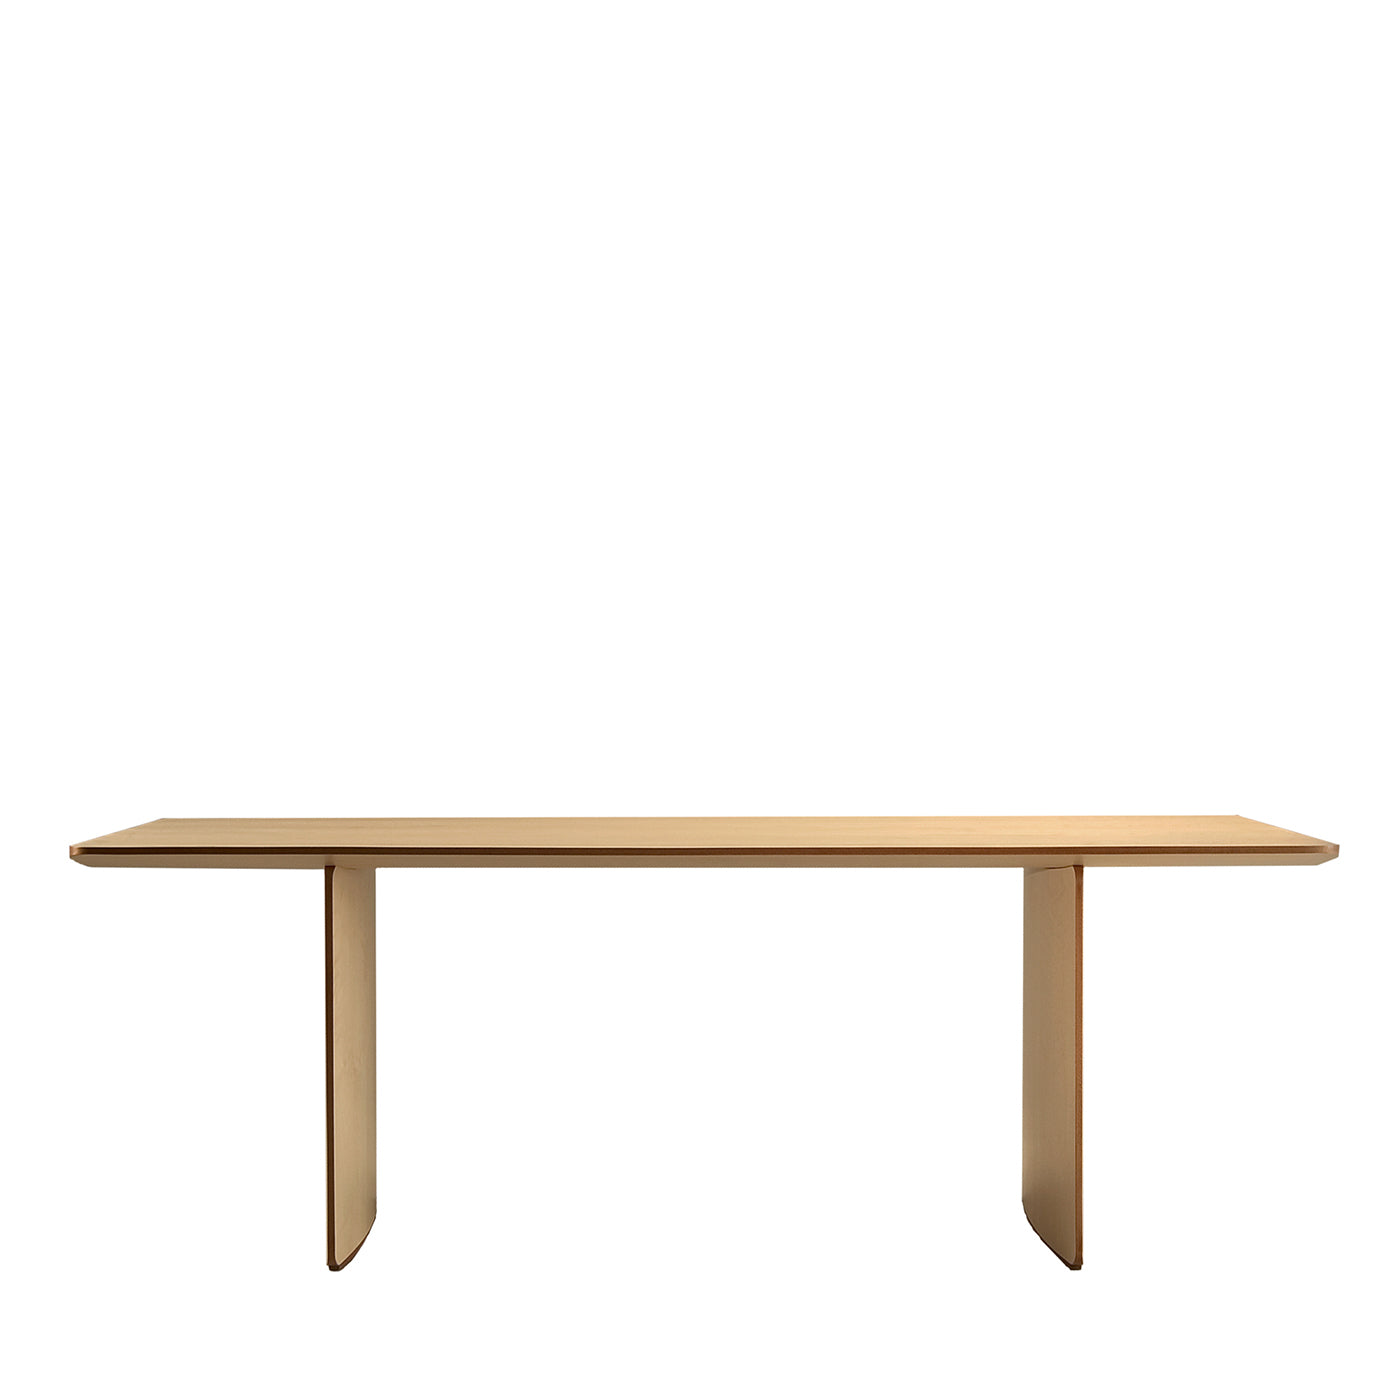 Aero Rectangular Maple Wood Table by Franco Poli - Main view